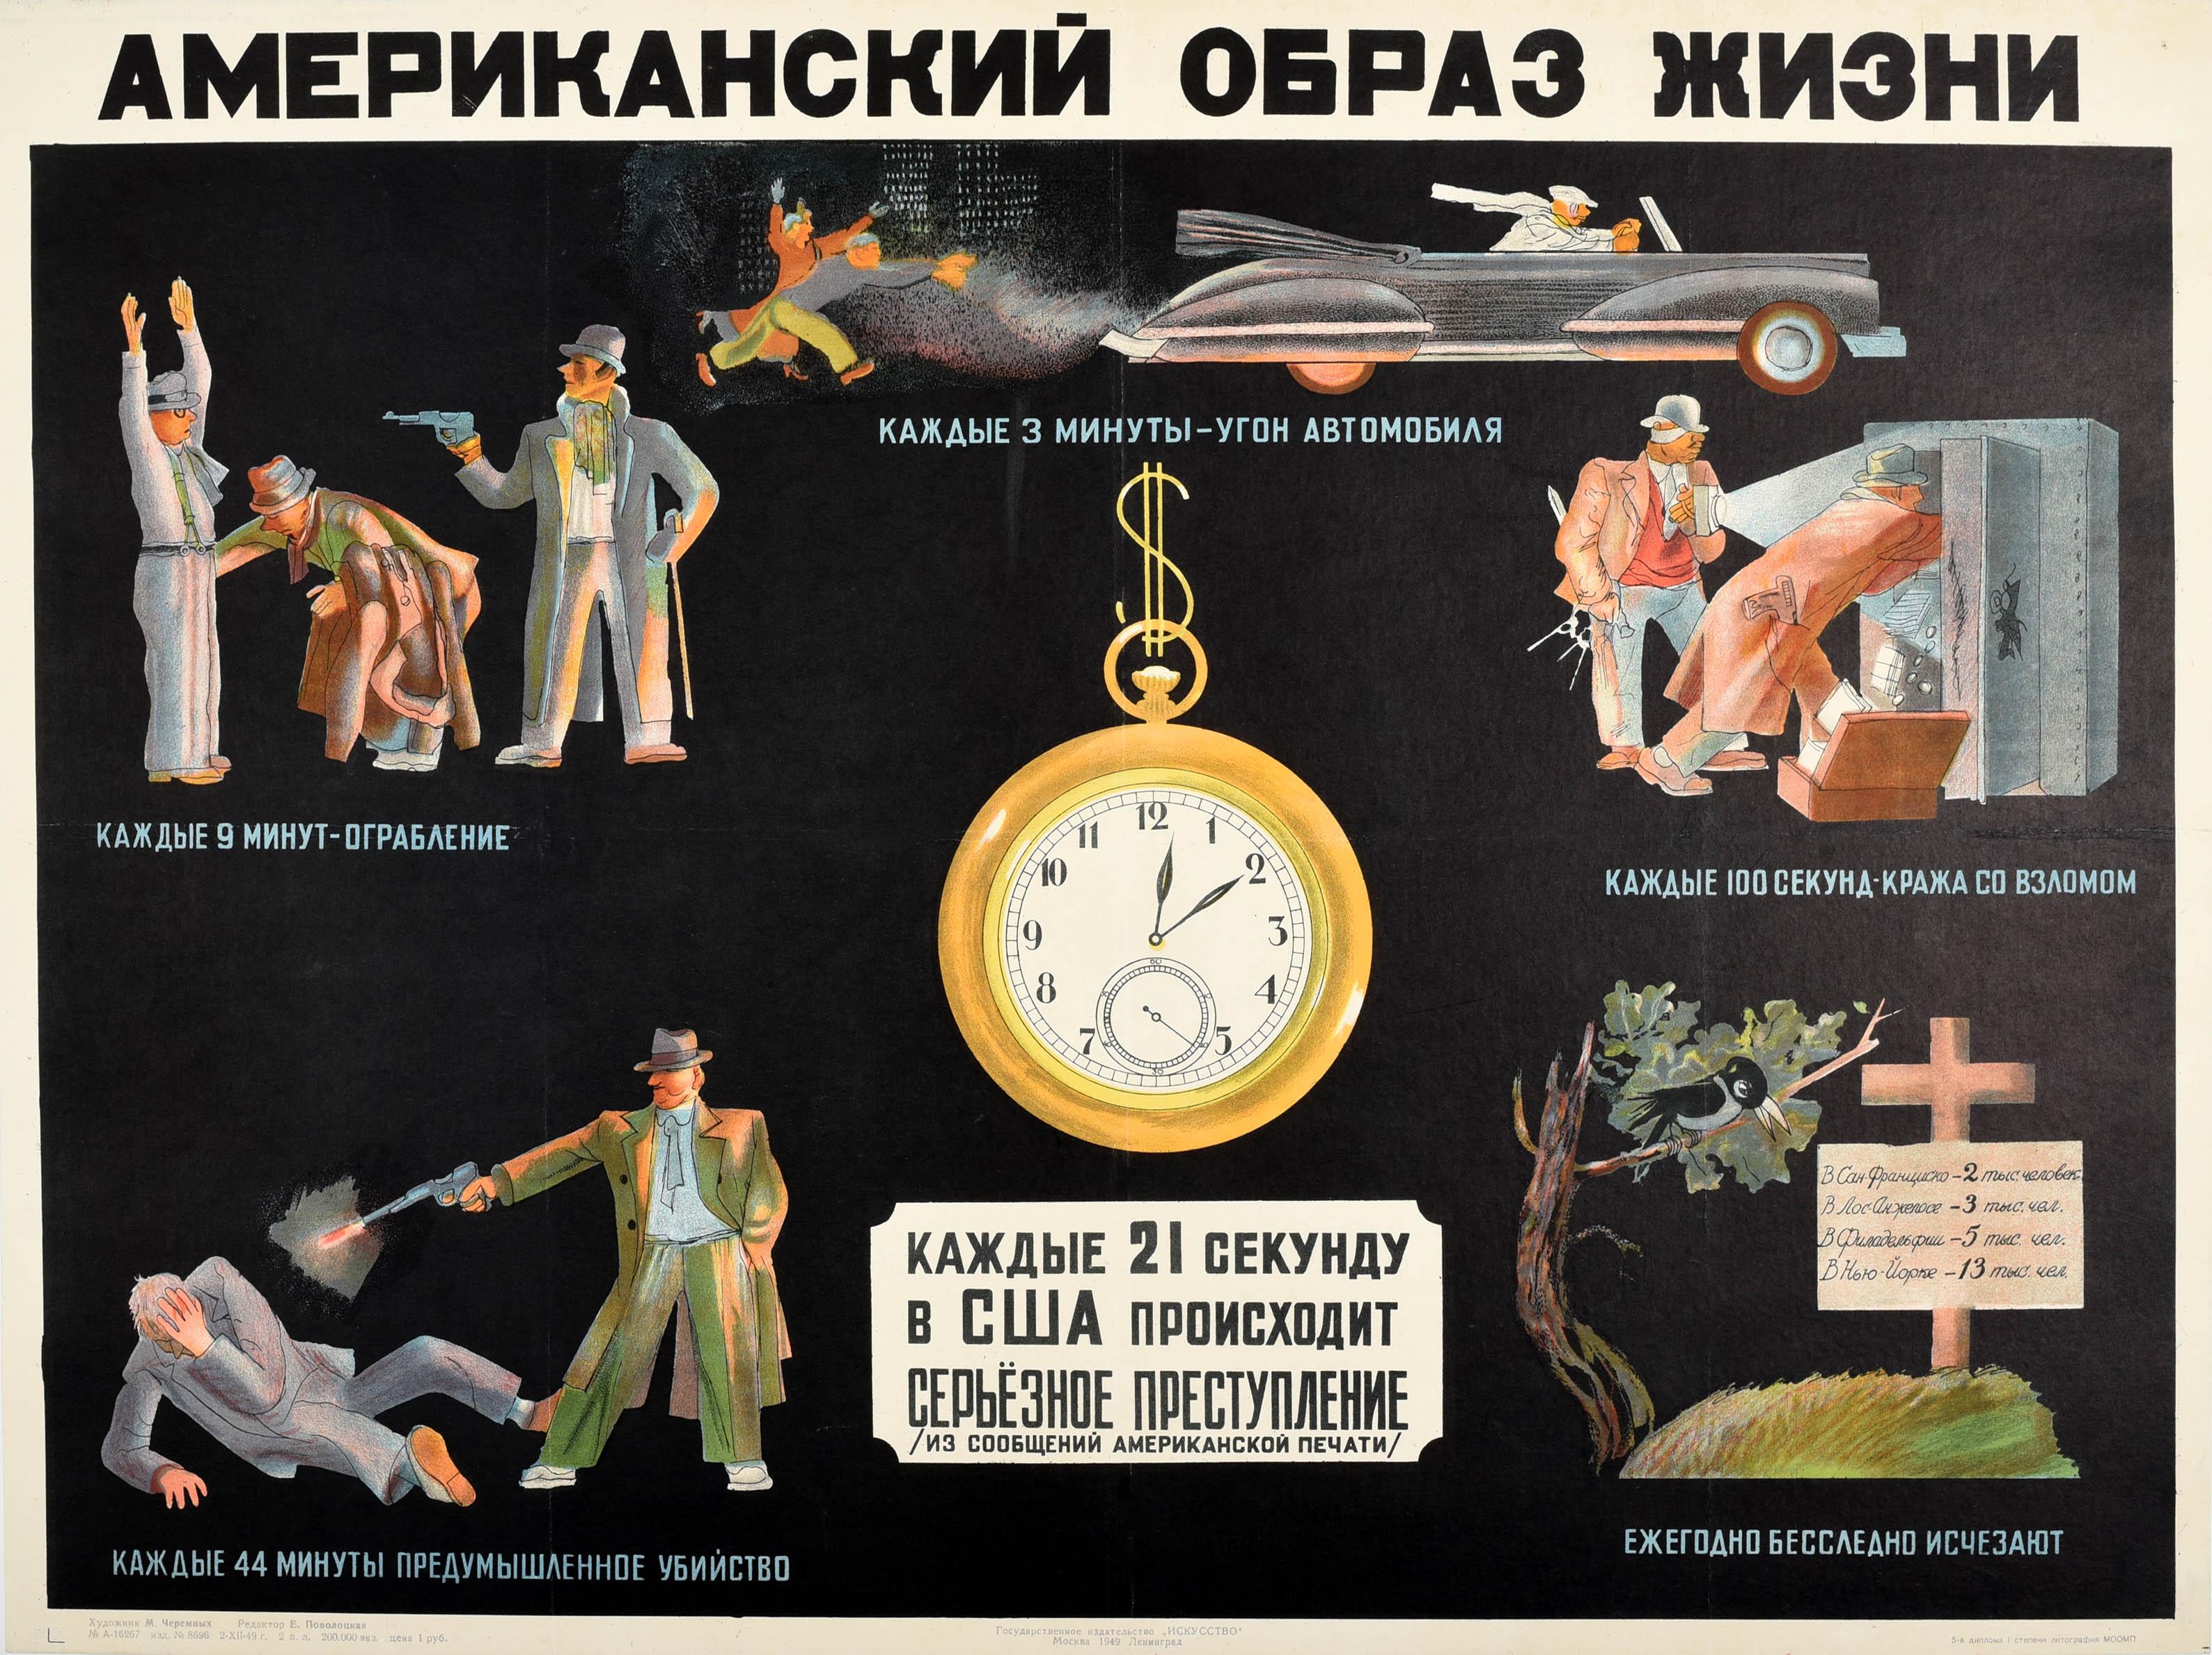 Cheremnykh Print - Original Vintage USSR Poster American Lifestyle Crime Anti-USA Soviet Propaganda